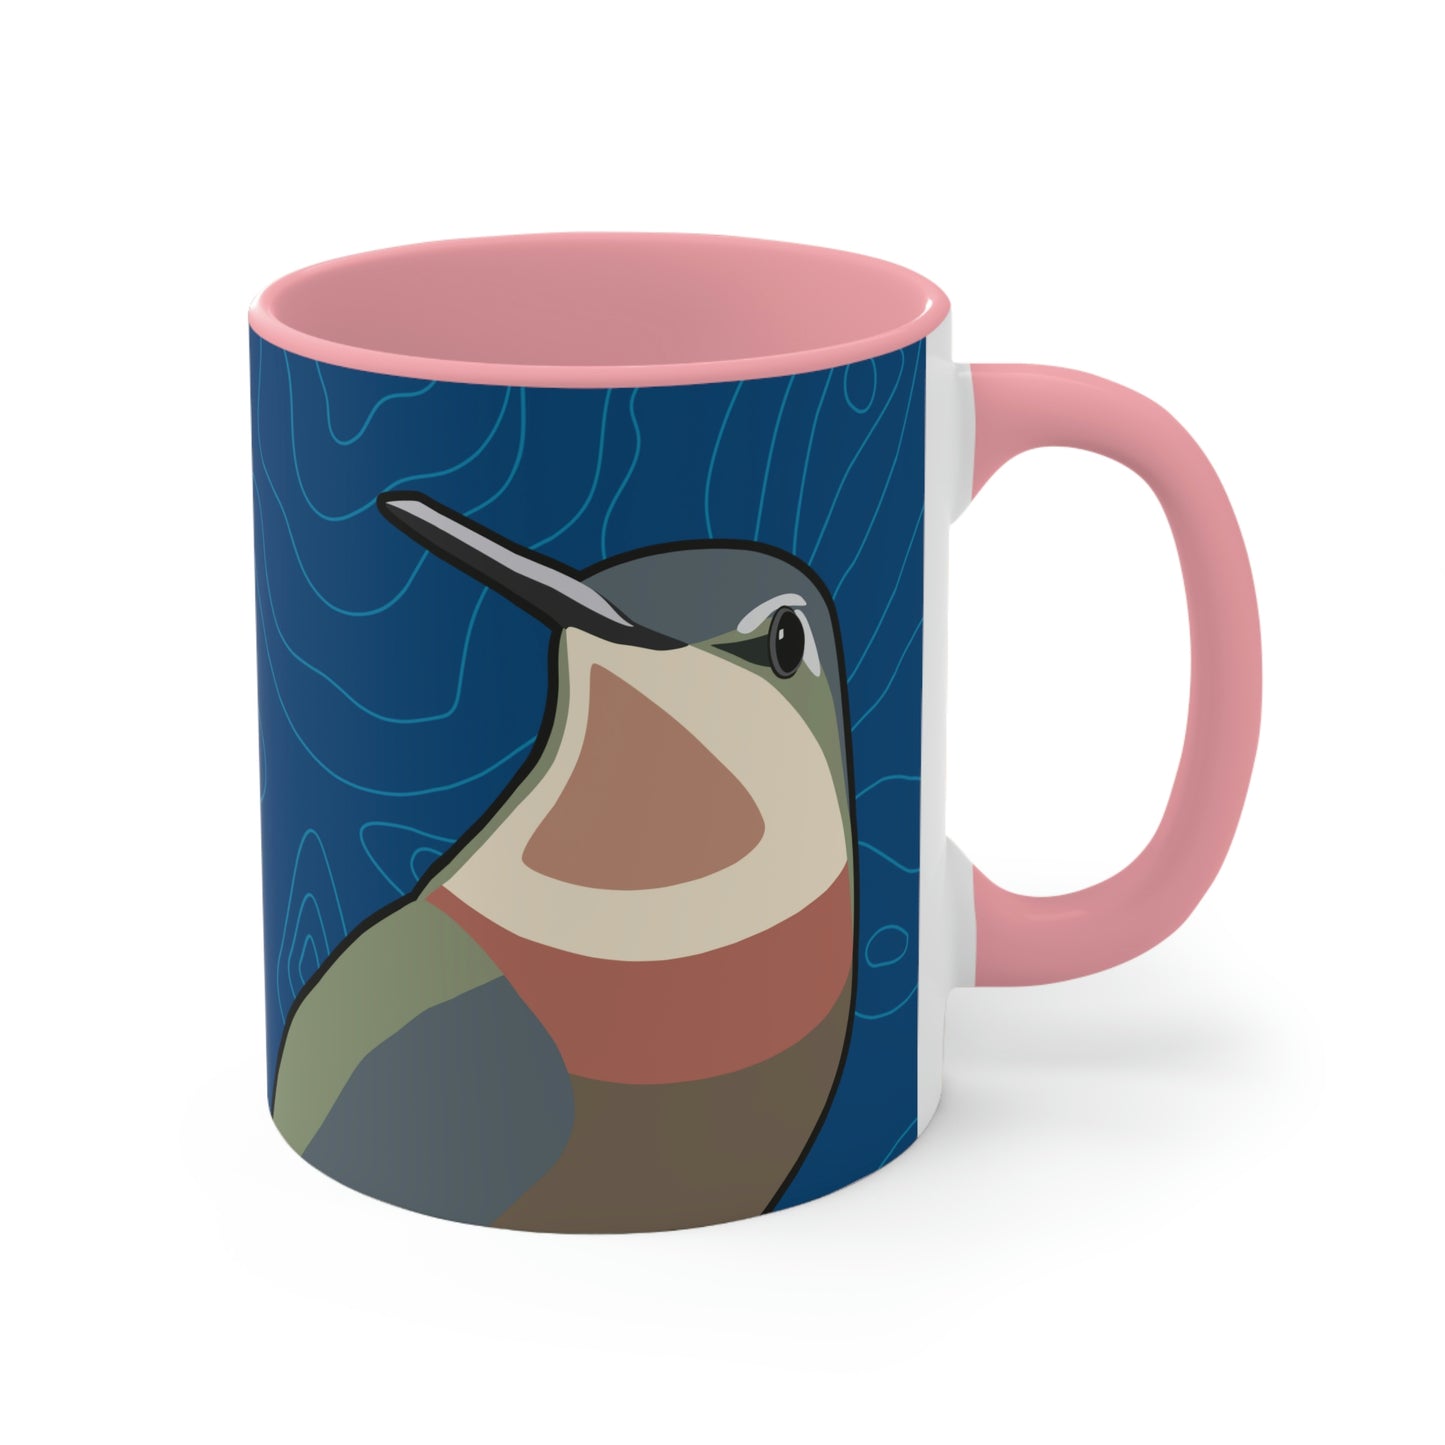 Hummingbirds on Classic Blue, Ceramic Mug - Perfect for Coffee, Tea, and More!